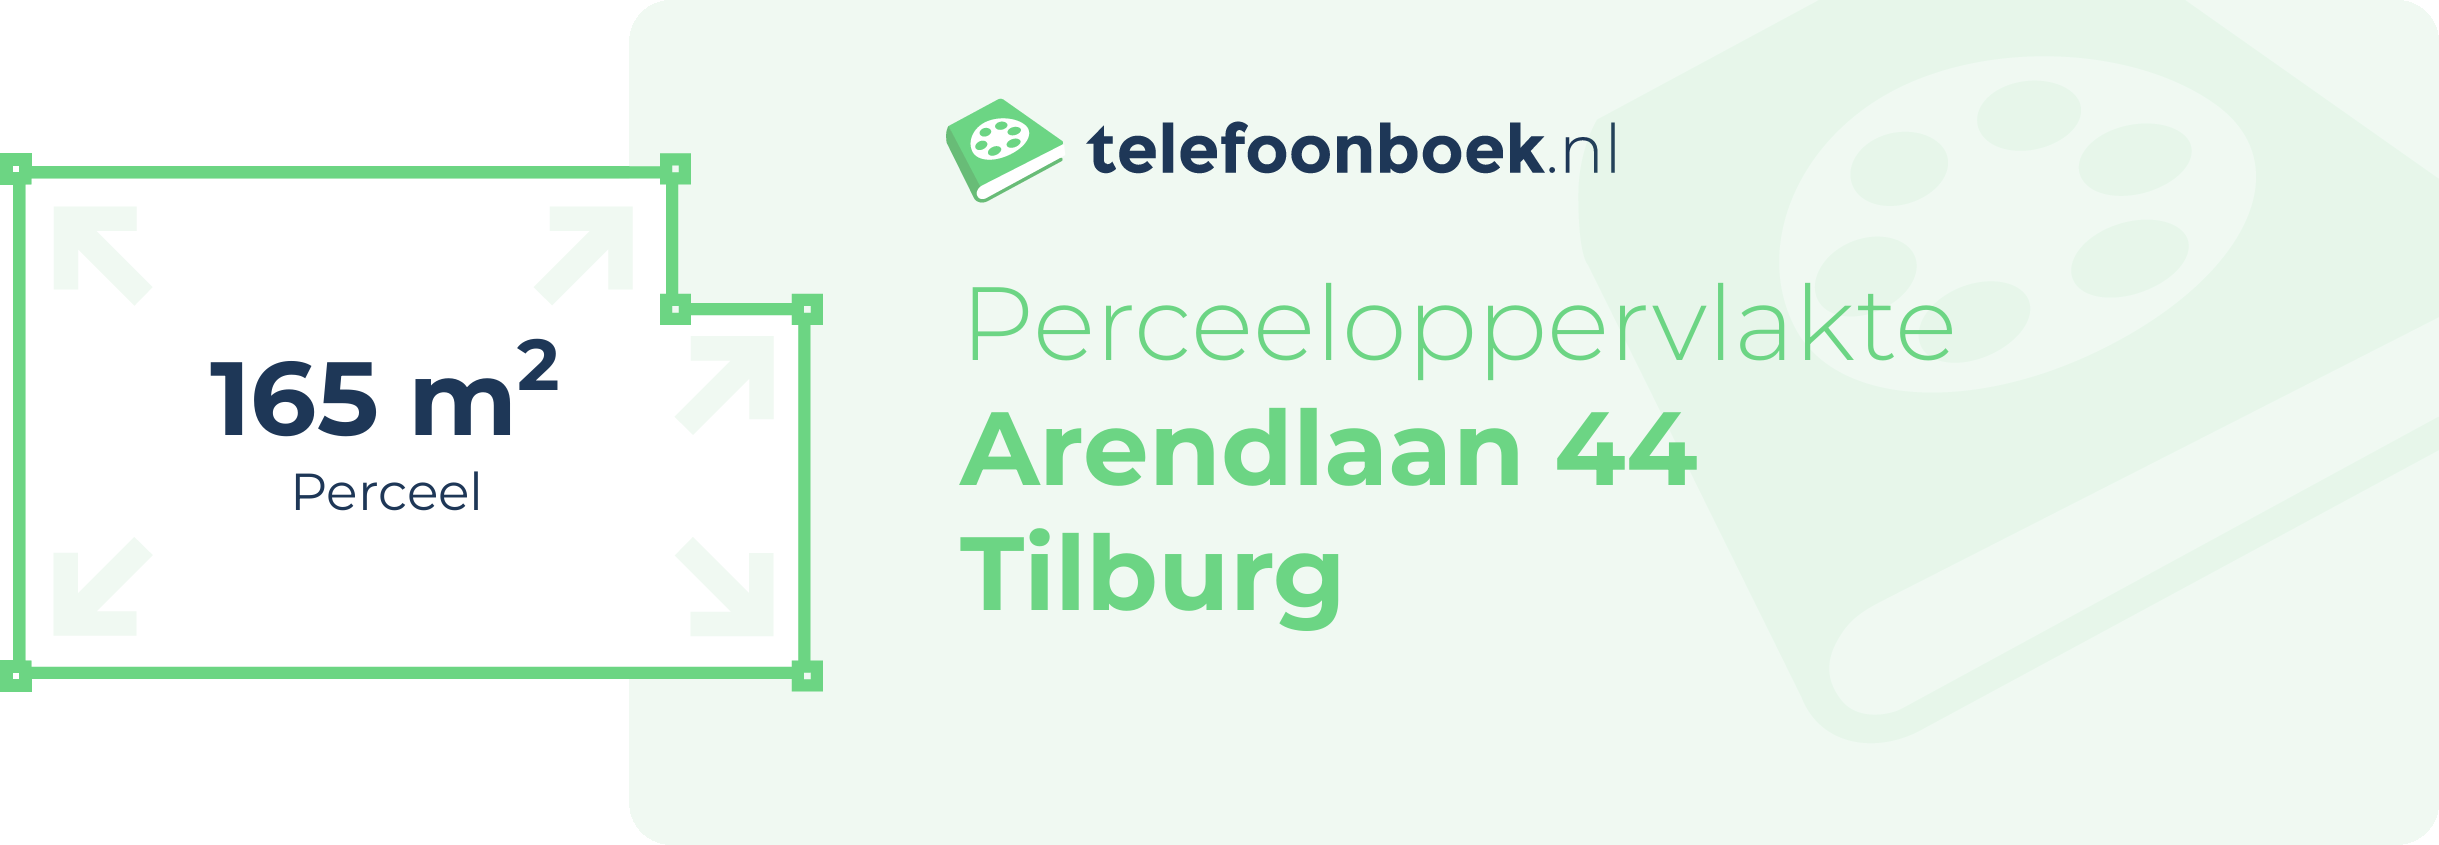 Perceeloppervlakte Arendlaan 44 Tilburg